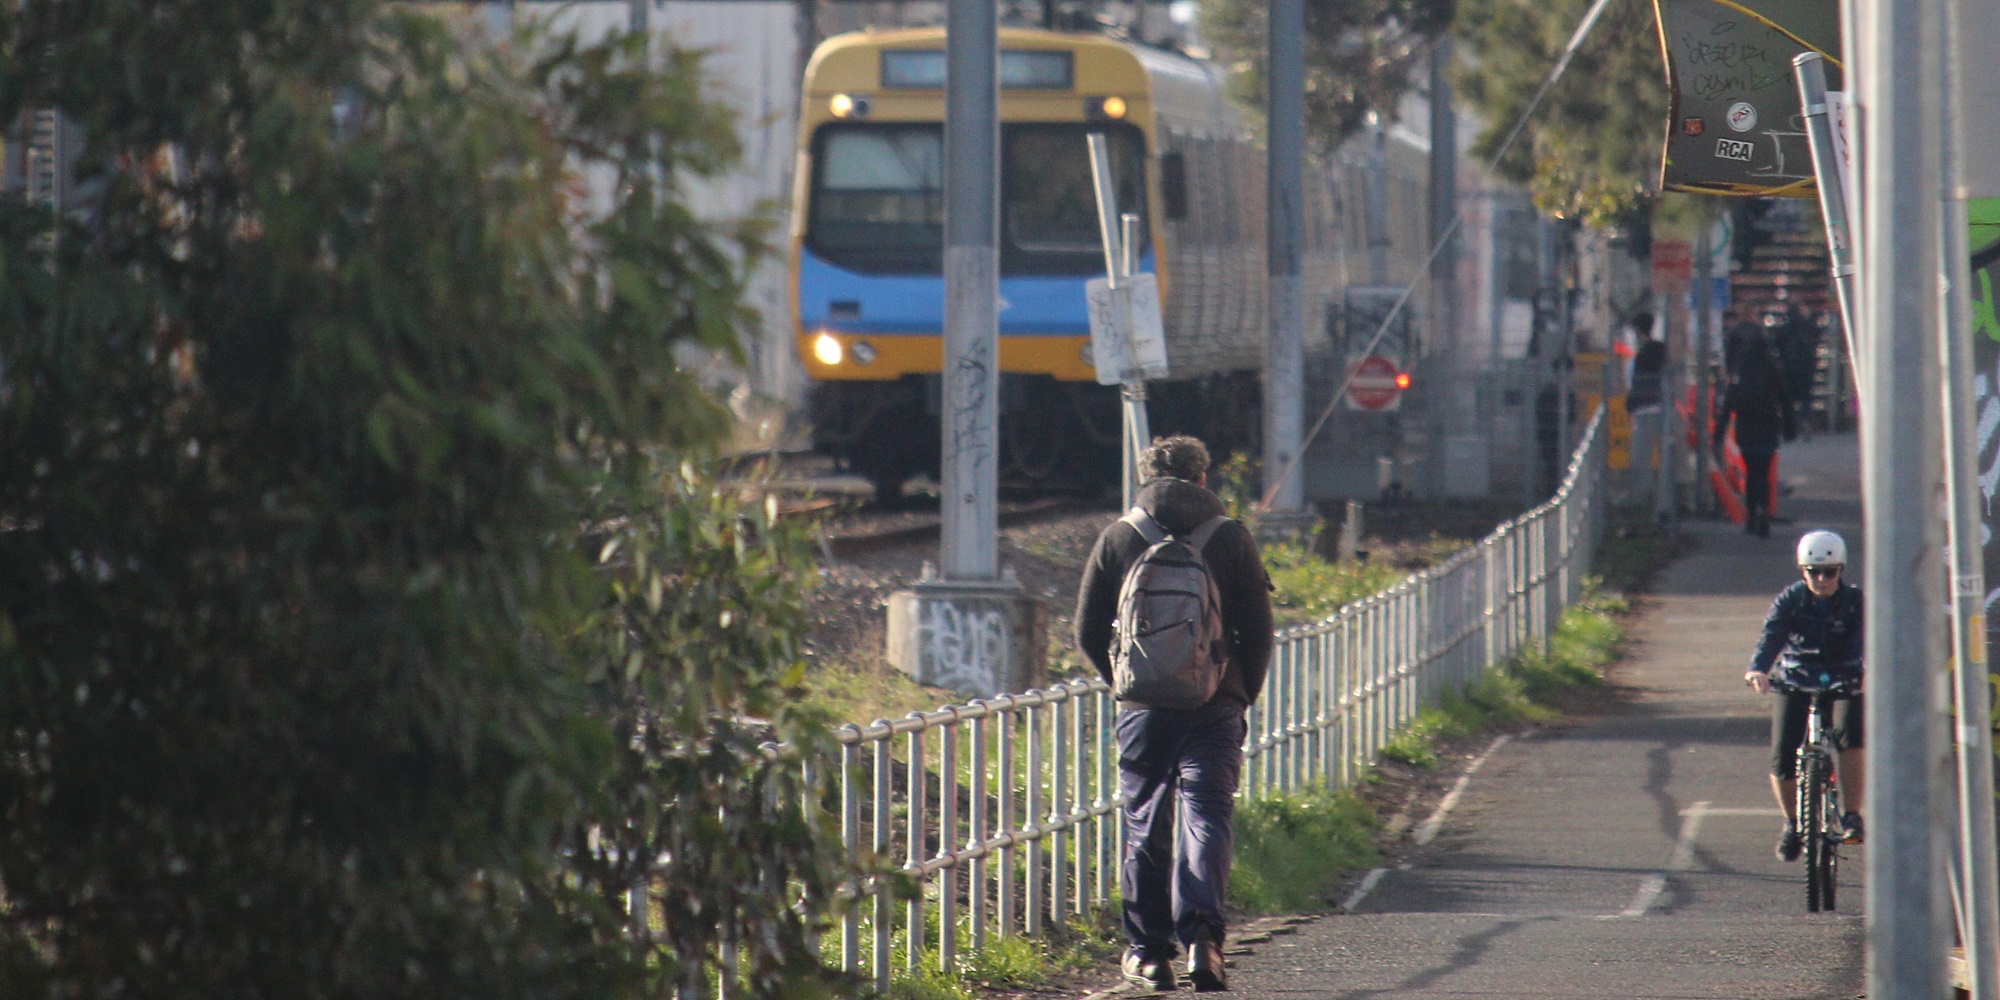 Train, walker, cyclist